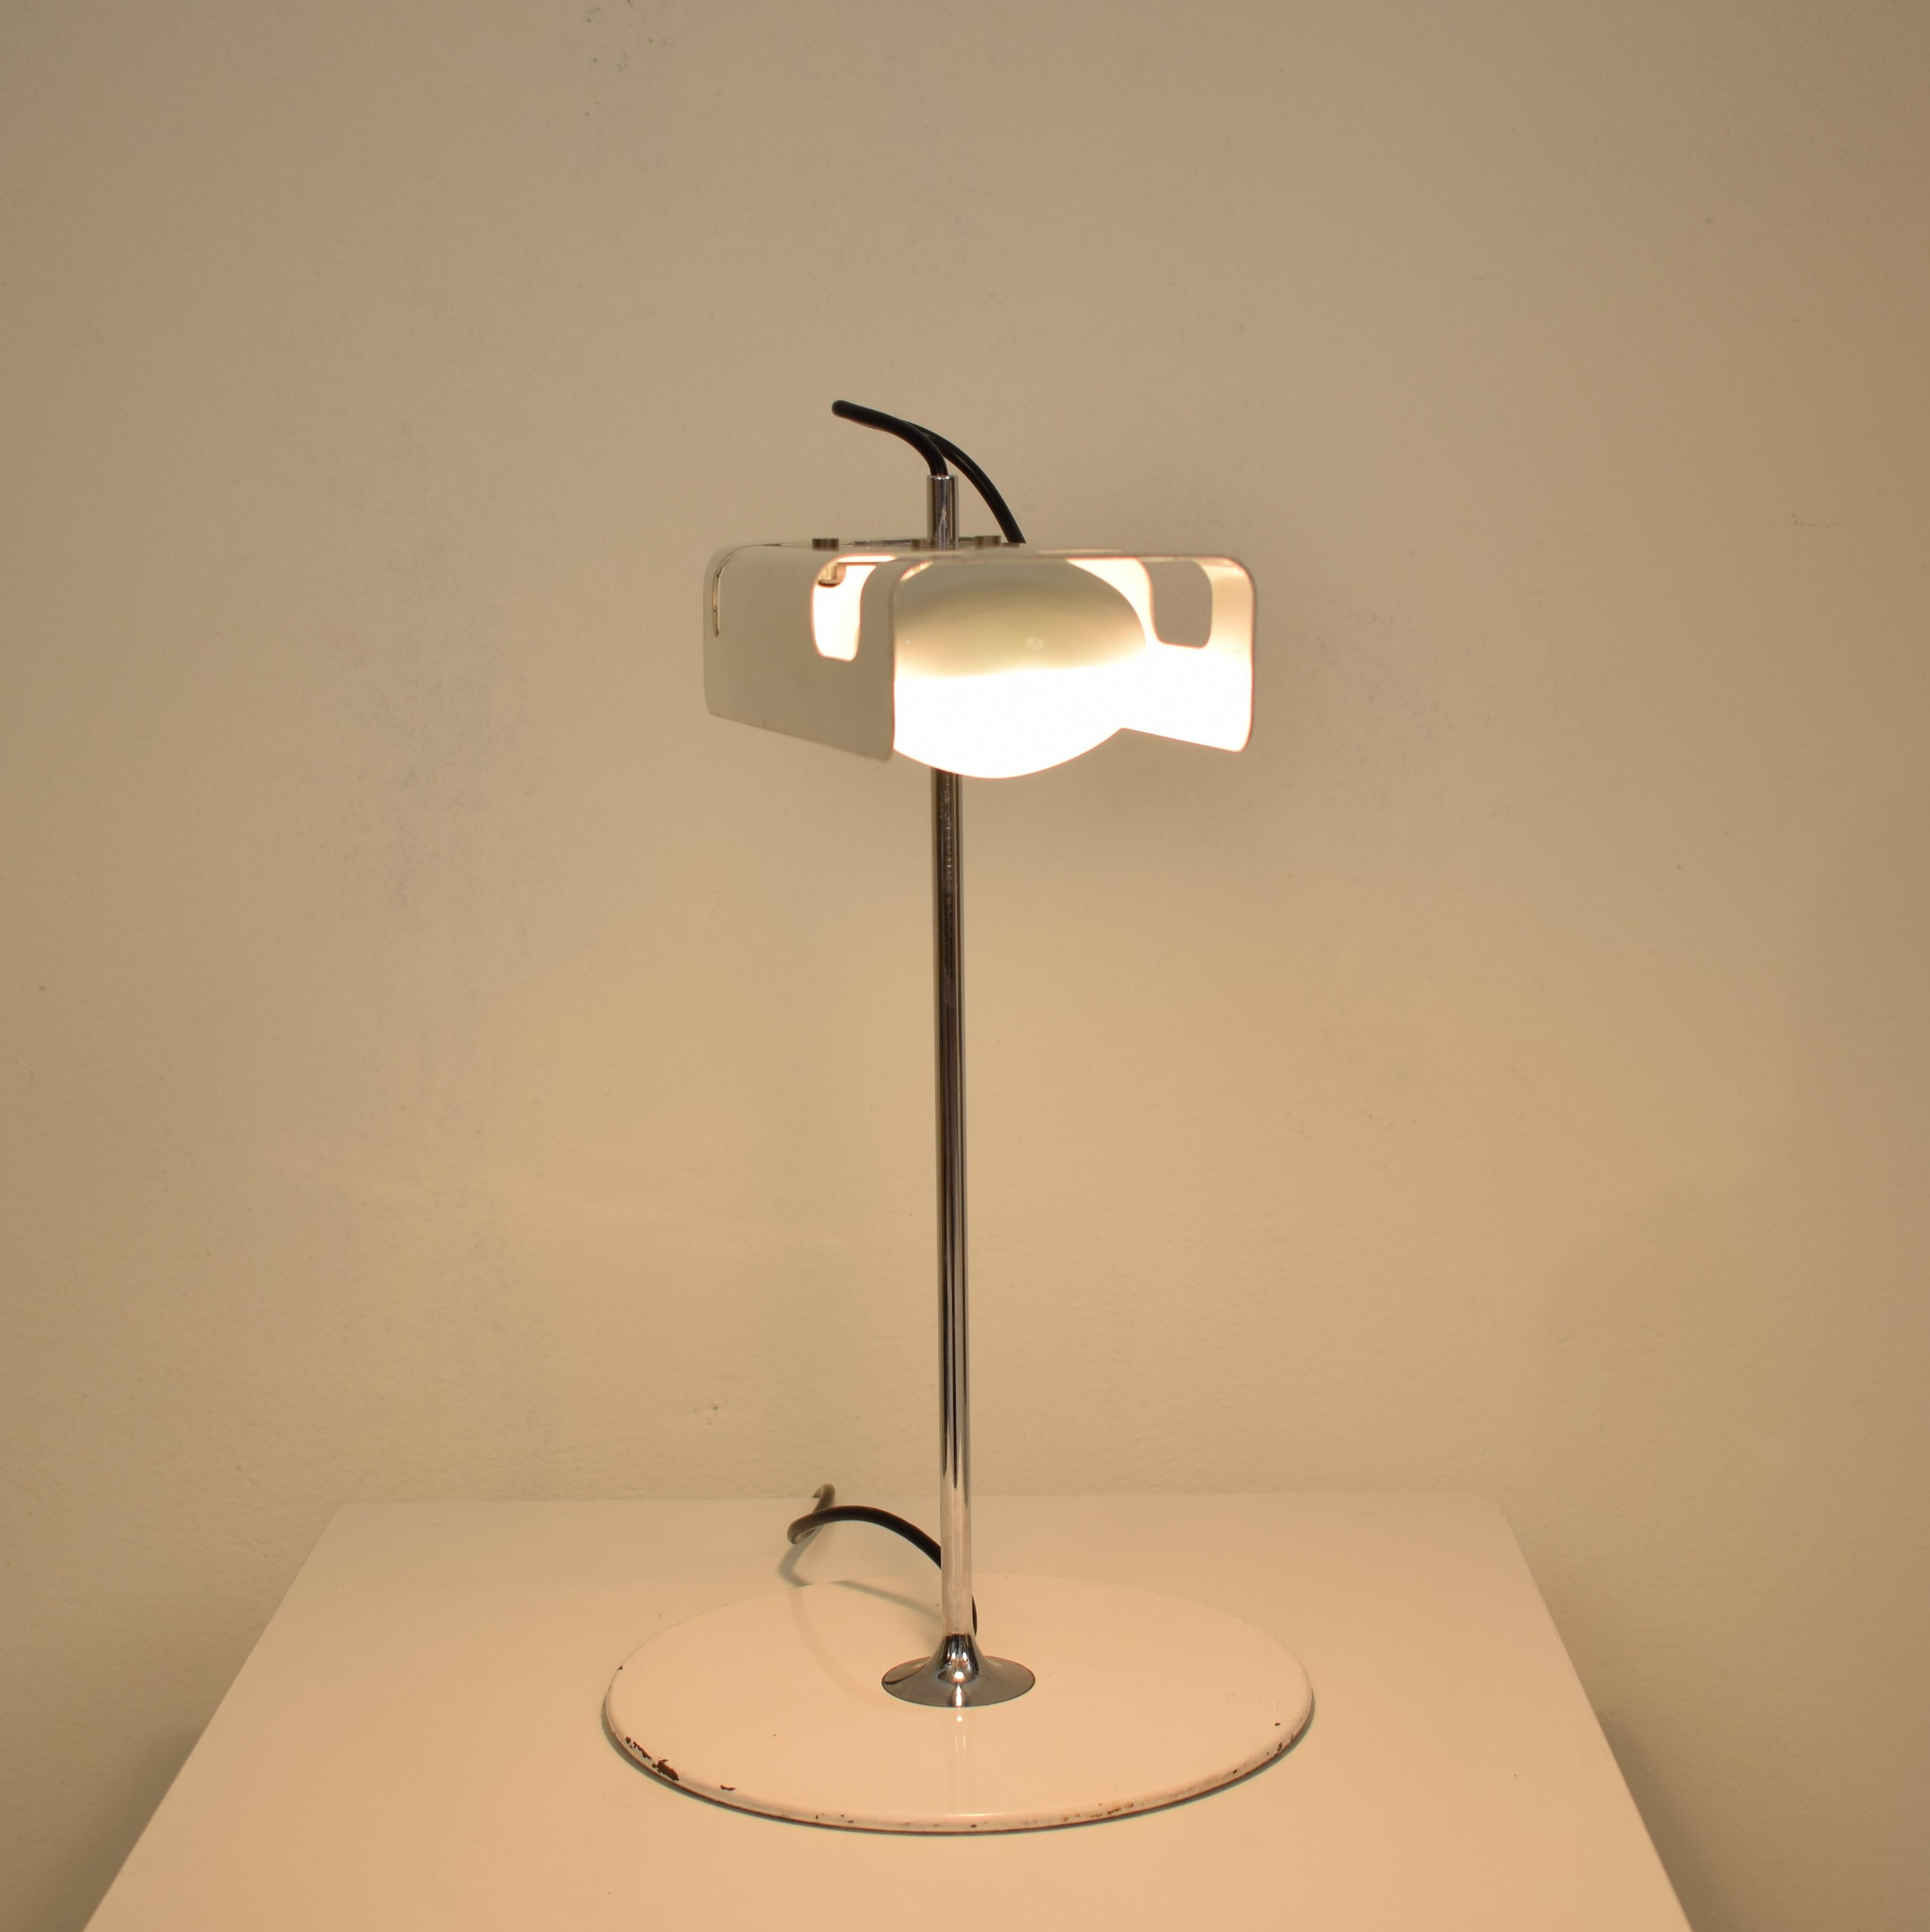 Italian Midcentury Table Lamp by Joe Colombo Model #291 Spider in White for Oluce, 1970